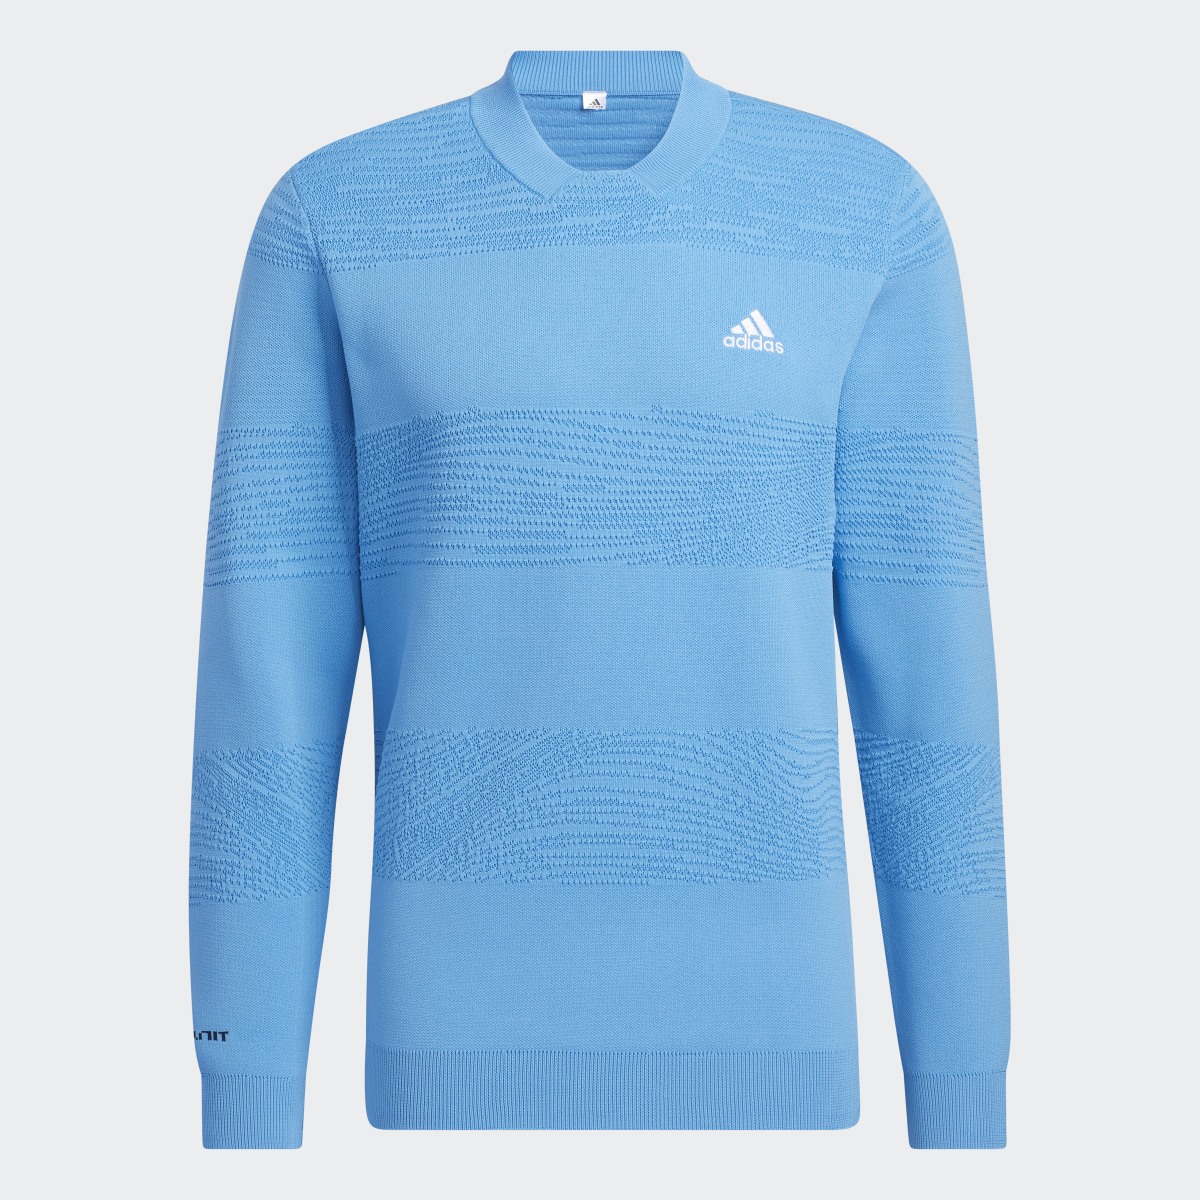 Adidas Made to be Remade Crewneck Sweatshirt. 5